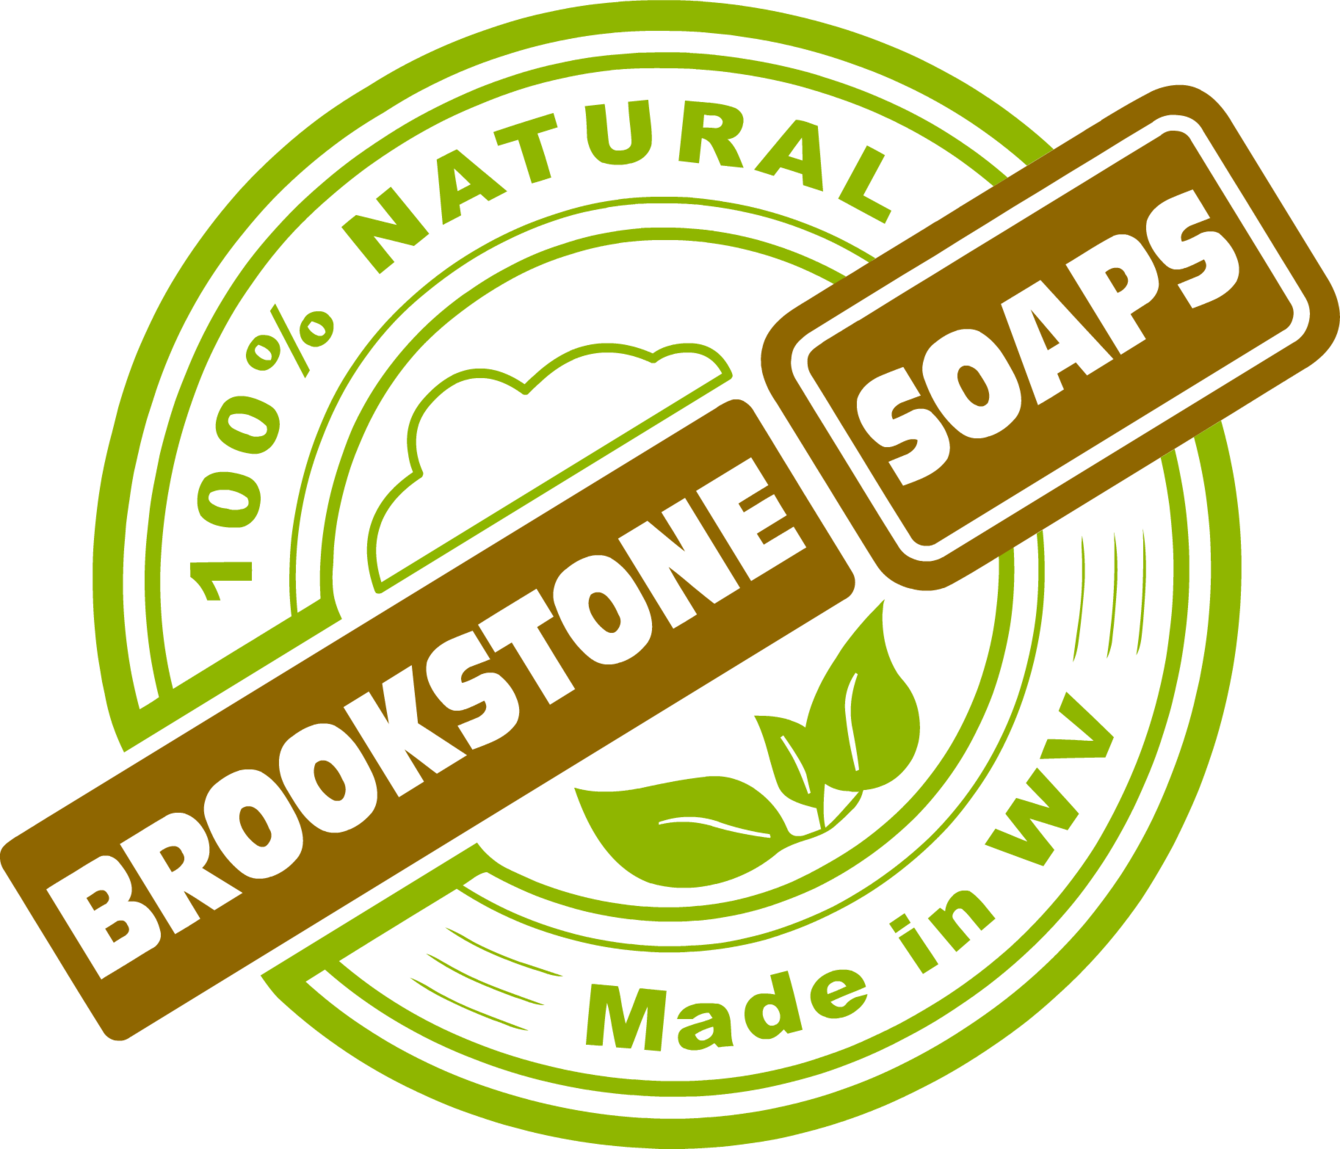 Brookstone Soaps